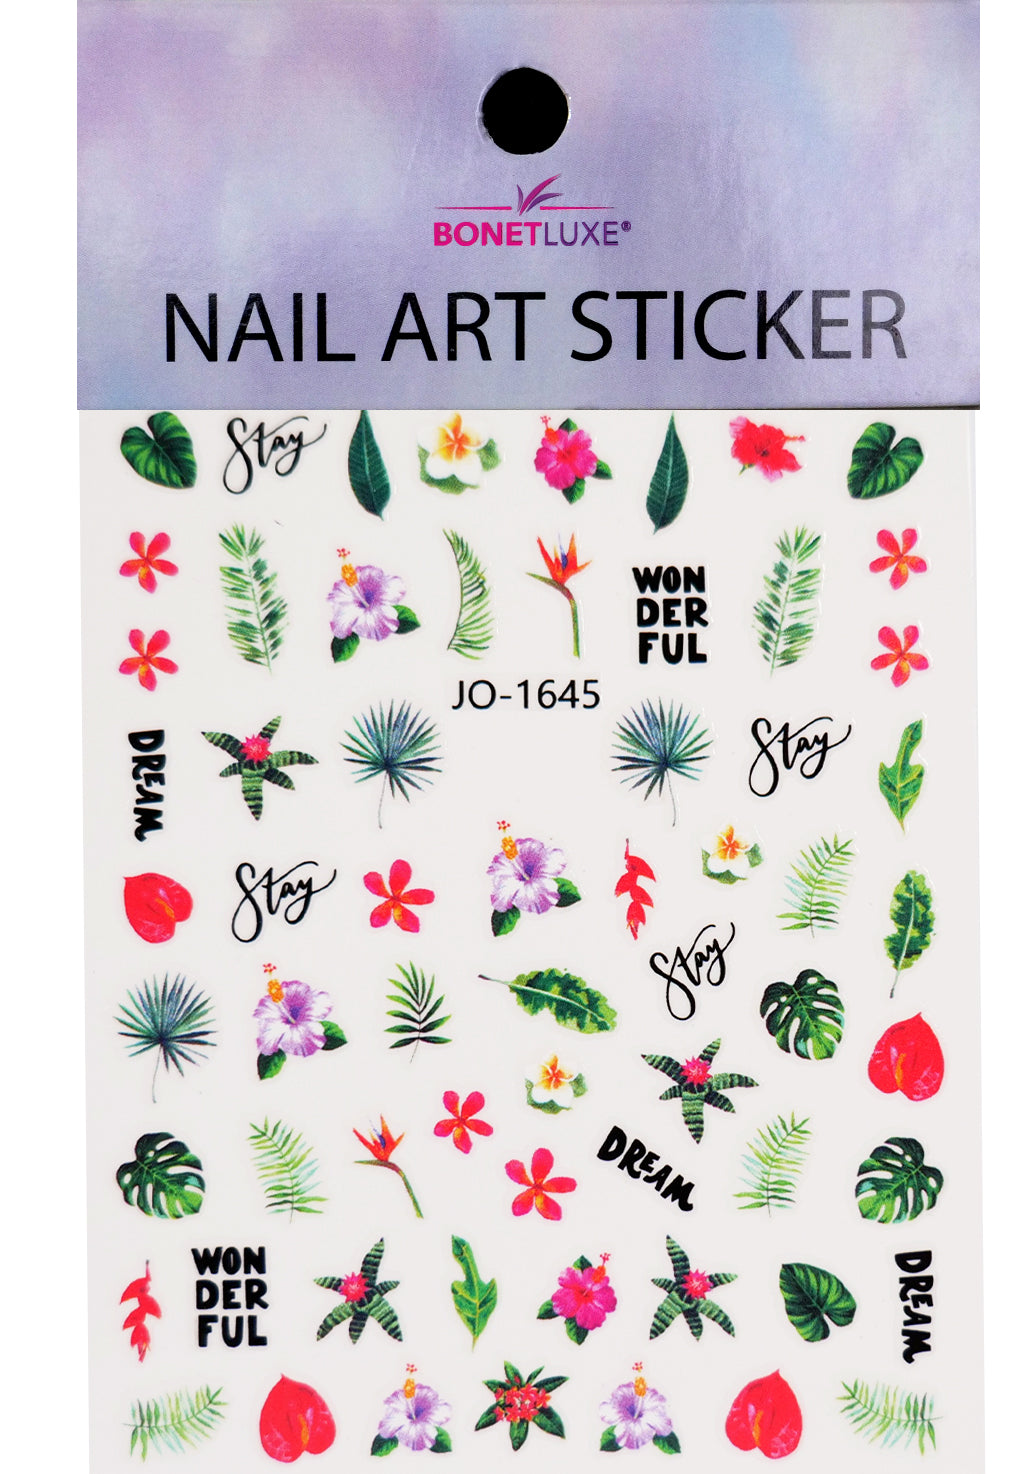 Nail Sticker Wonderful Stay